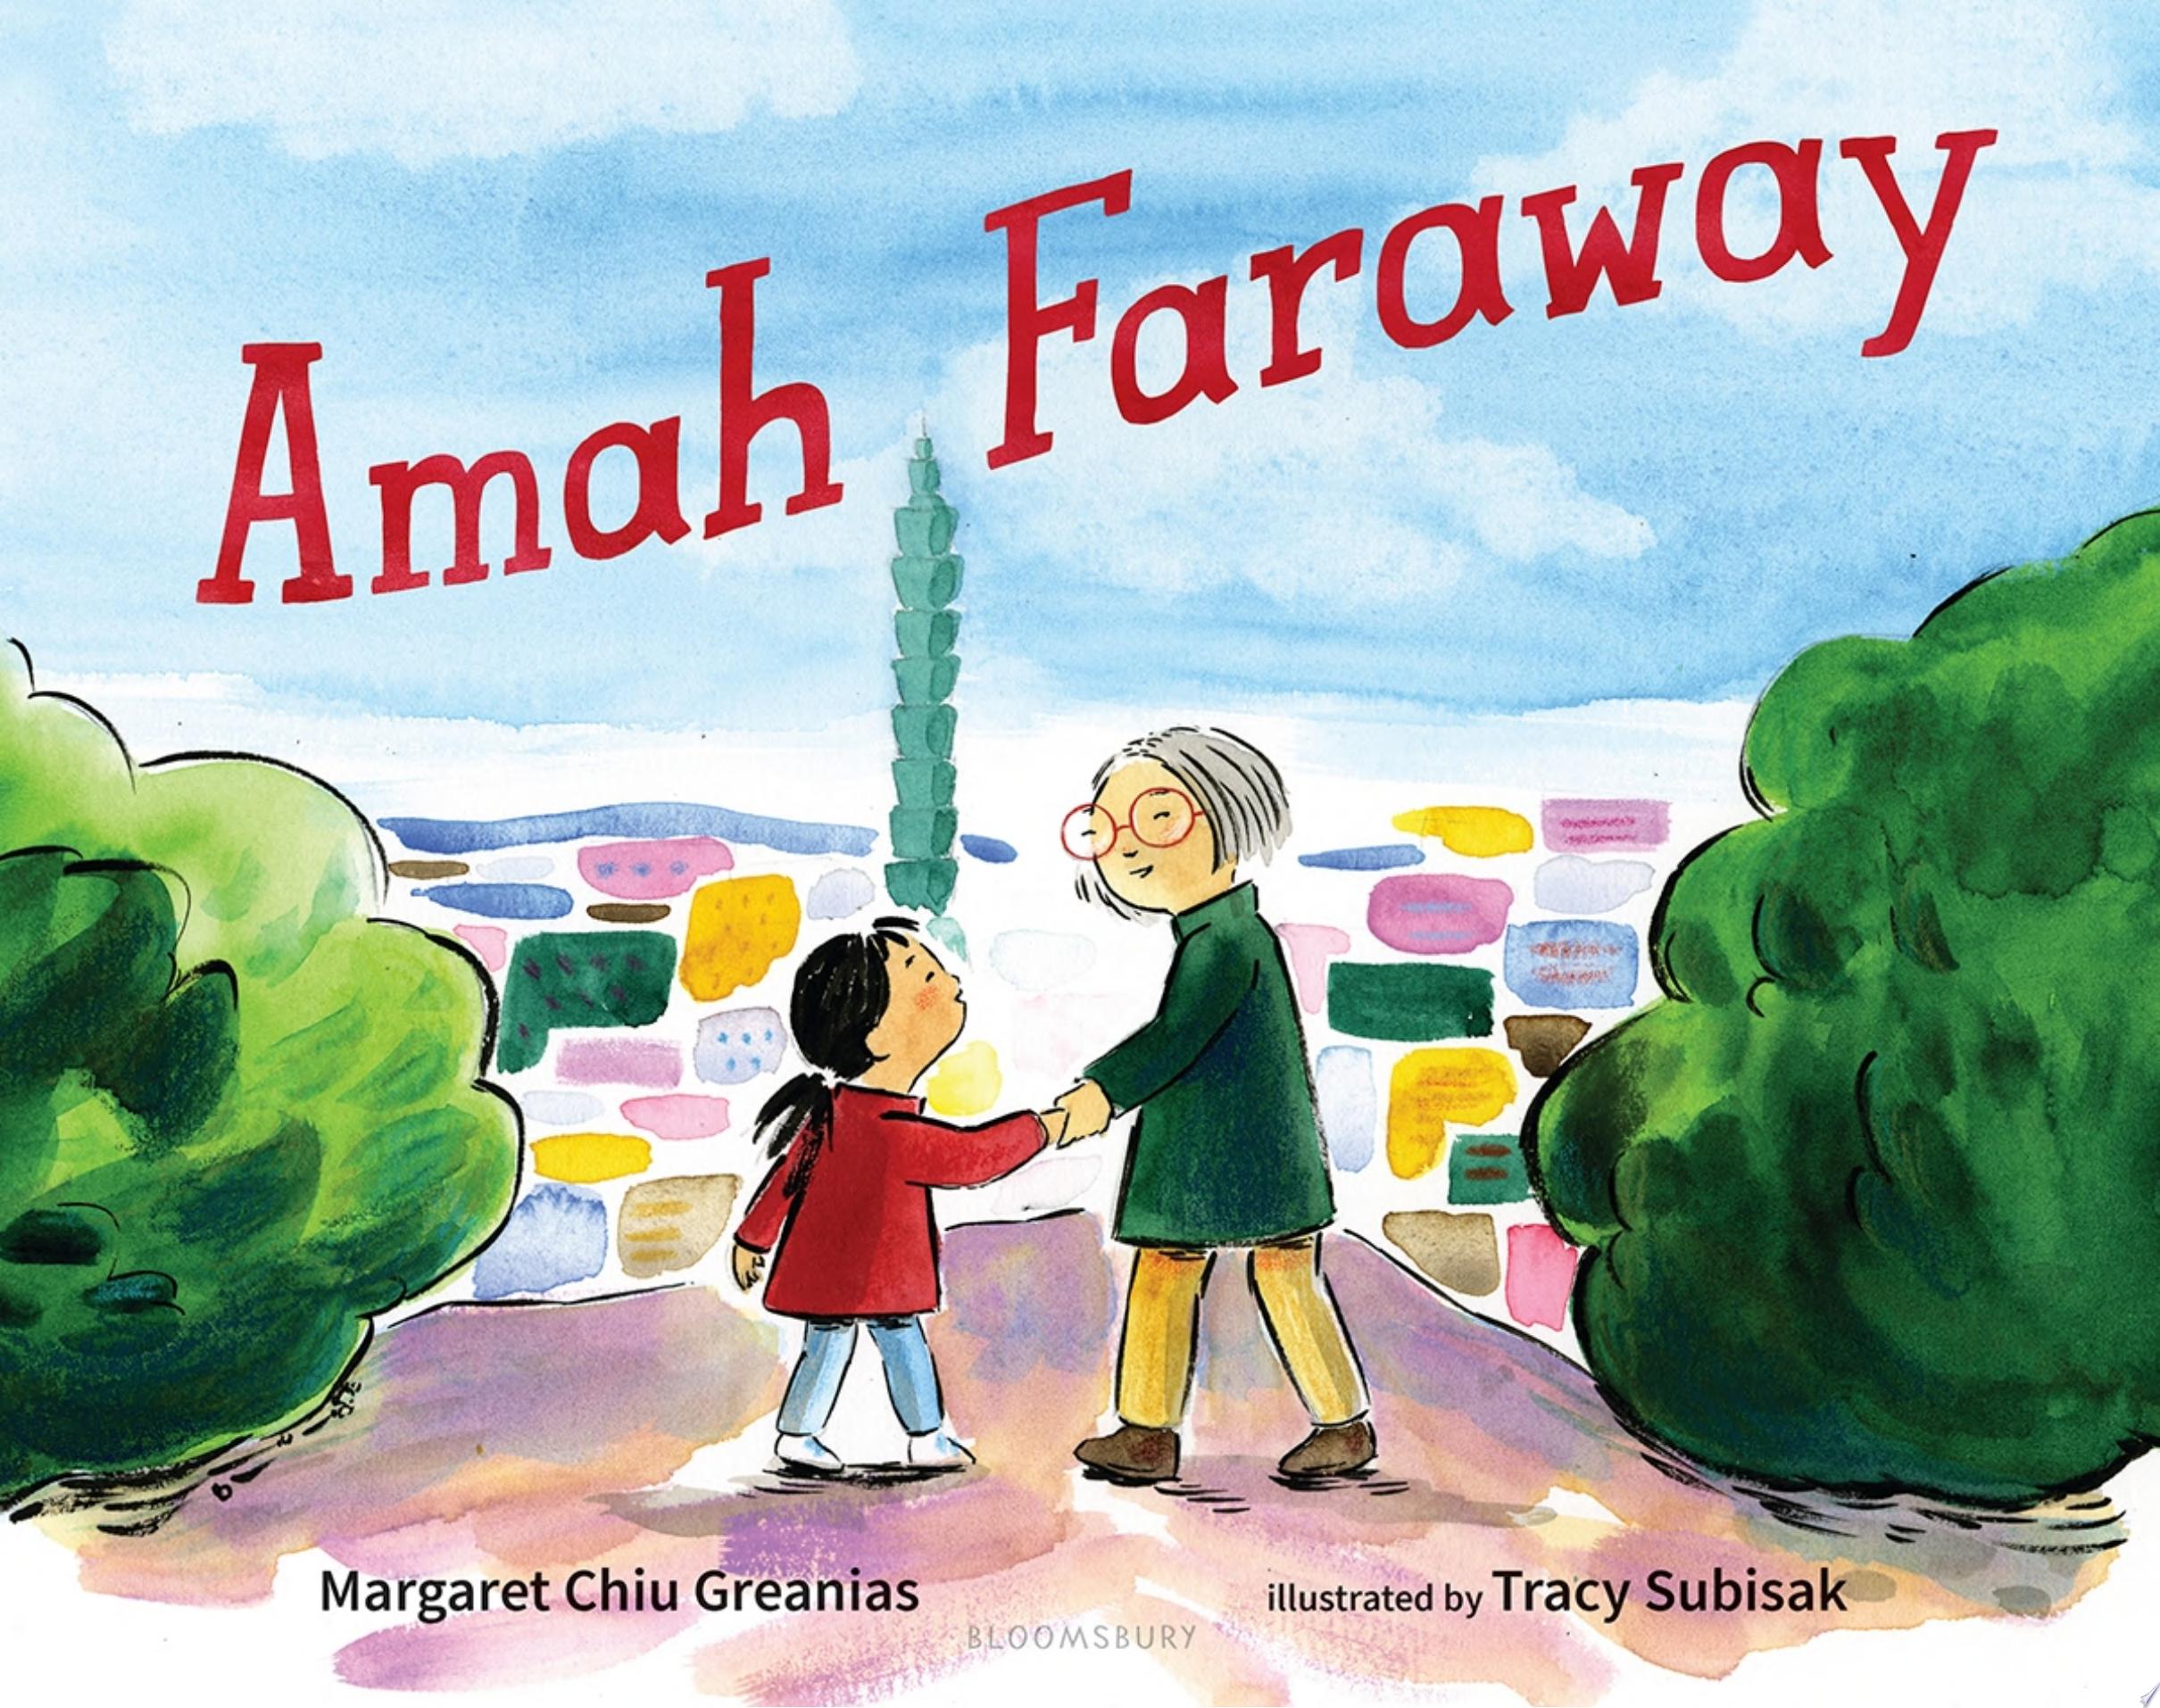 Image for "Amah Faraway"